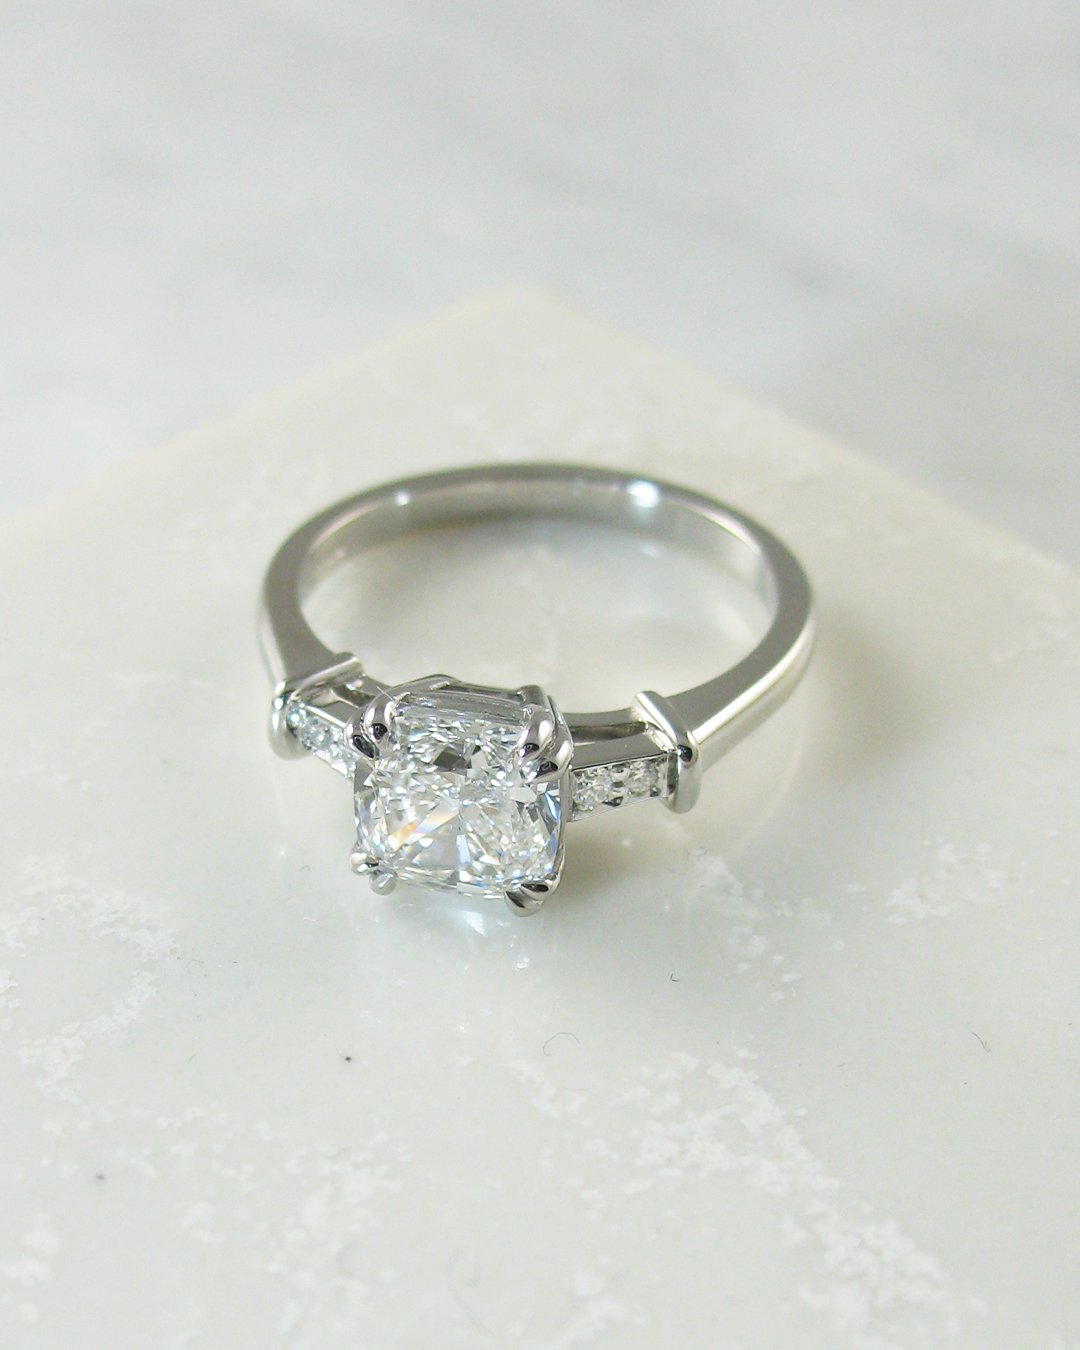 A perfect cushion cut diamond engagement ring